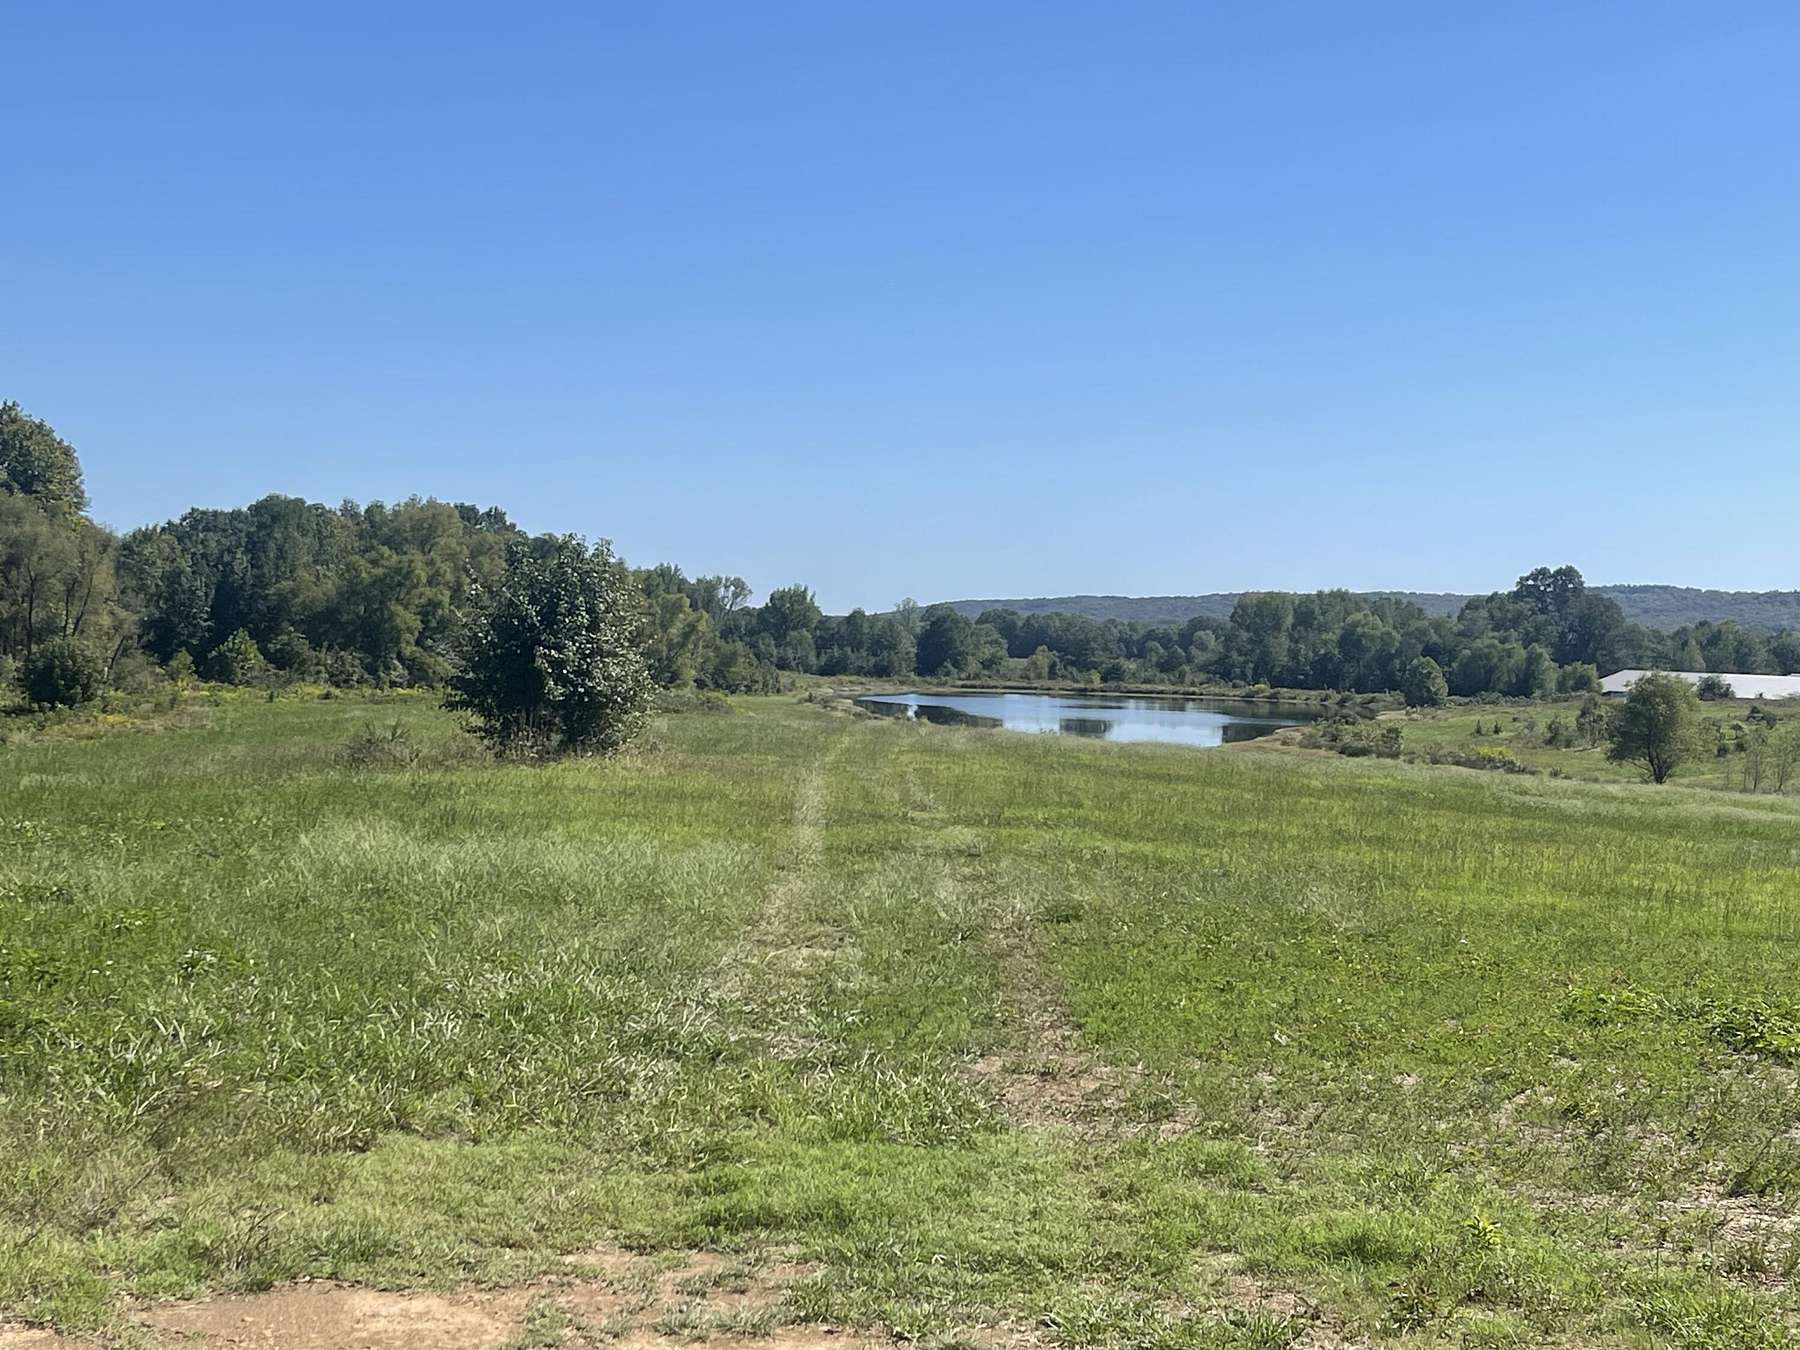 56 Acres of Recreational Land for Sale in Hartman, Arkansas